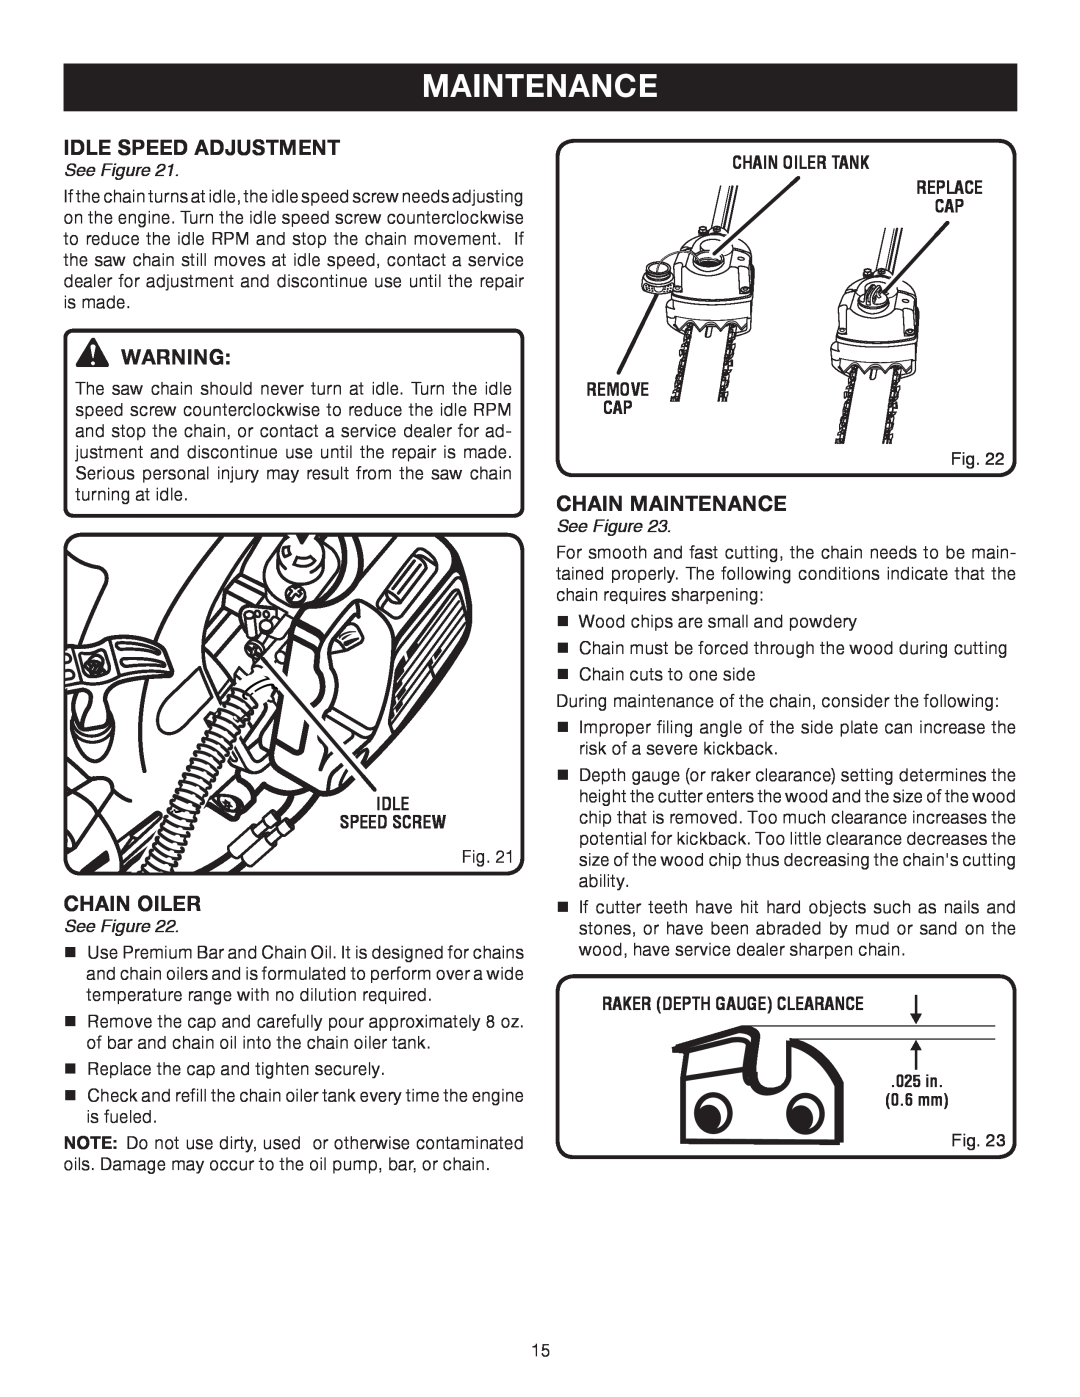 Ryobi RY52014 manual Idle Speed Adjustment, Chain Maintenance, Chain Oiler, See Figure, Idle Speed Screw 